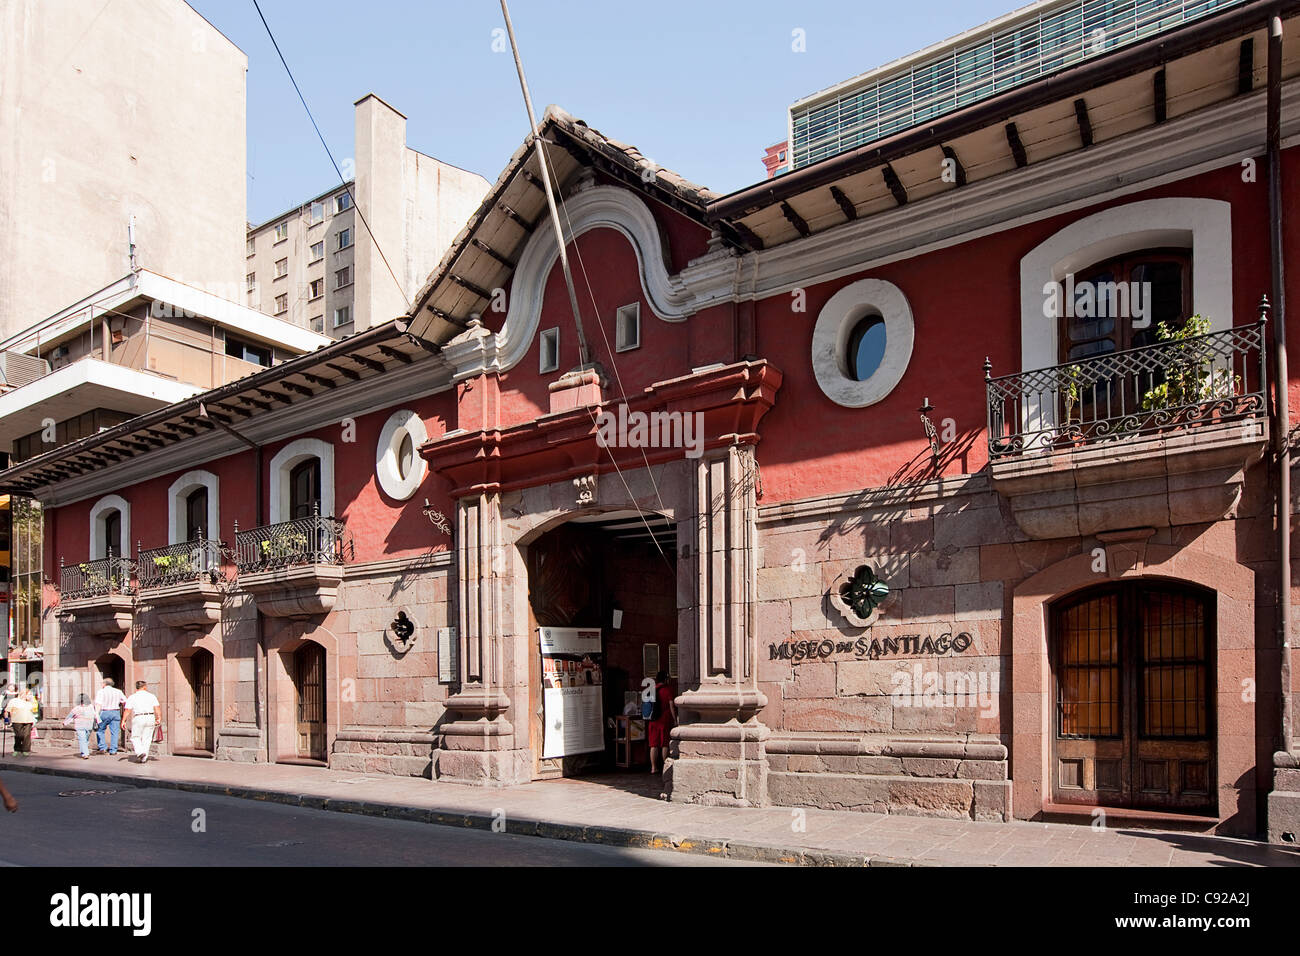 Chile, Santiago, Casa Colorada, facade of colonial building housing the Museo de Santiago (Museum of Santiago) Stock Photo